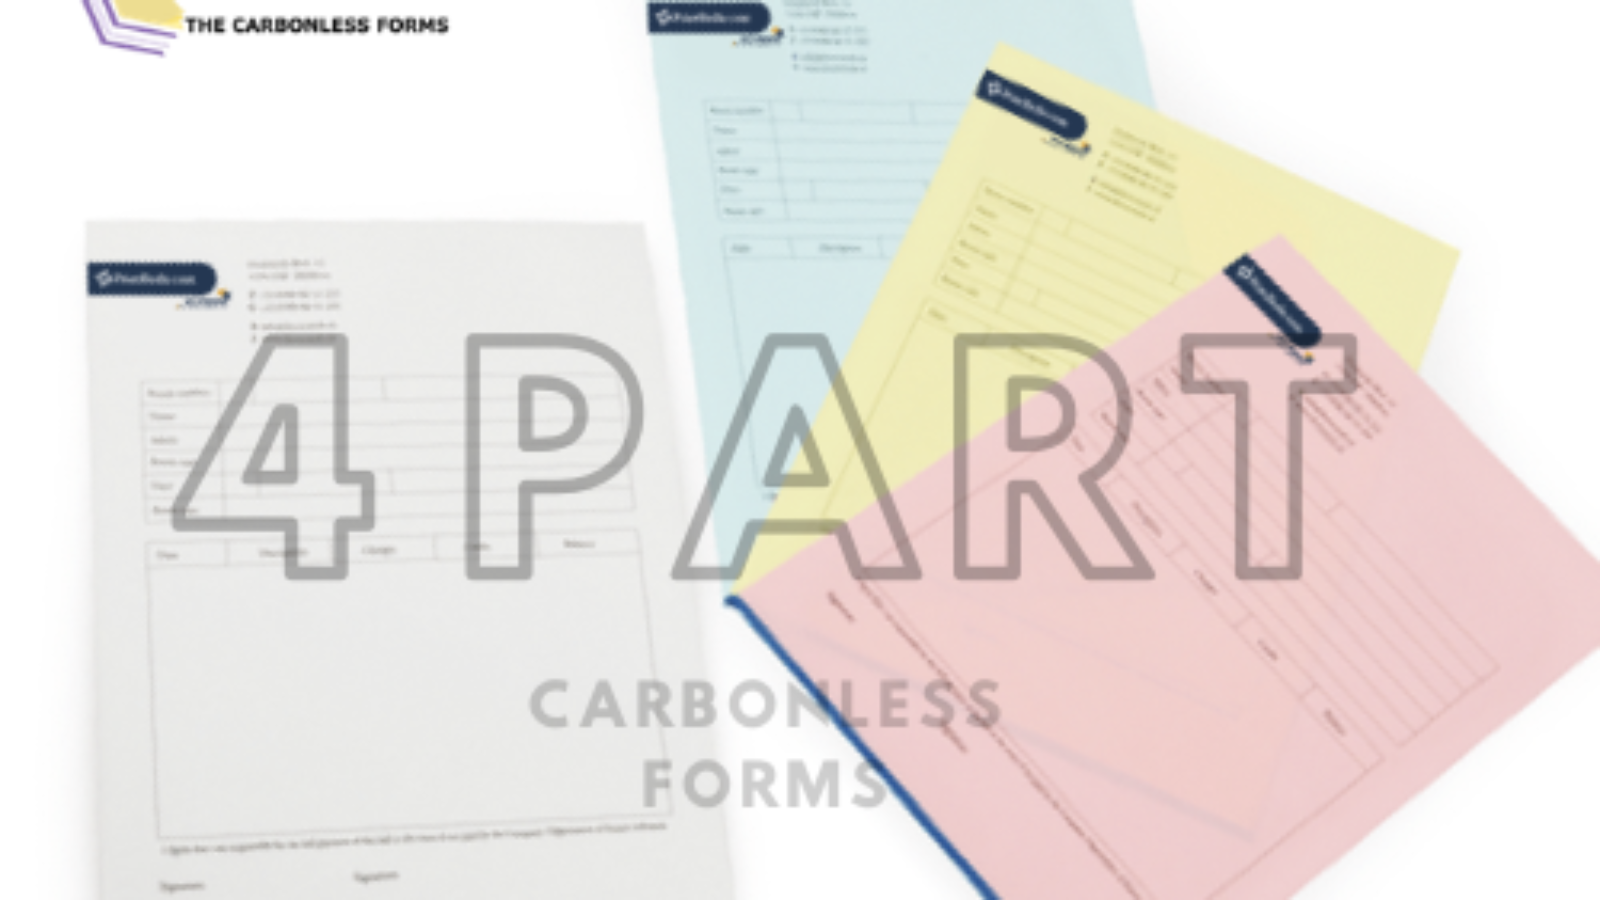 4 Part carbonless forms